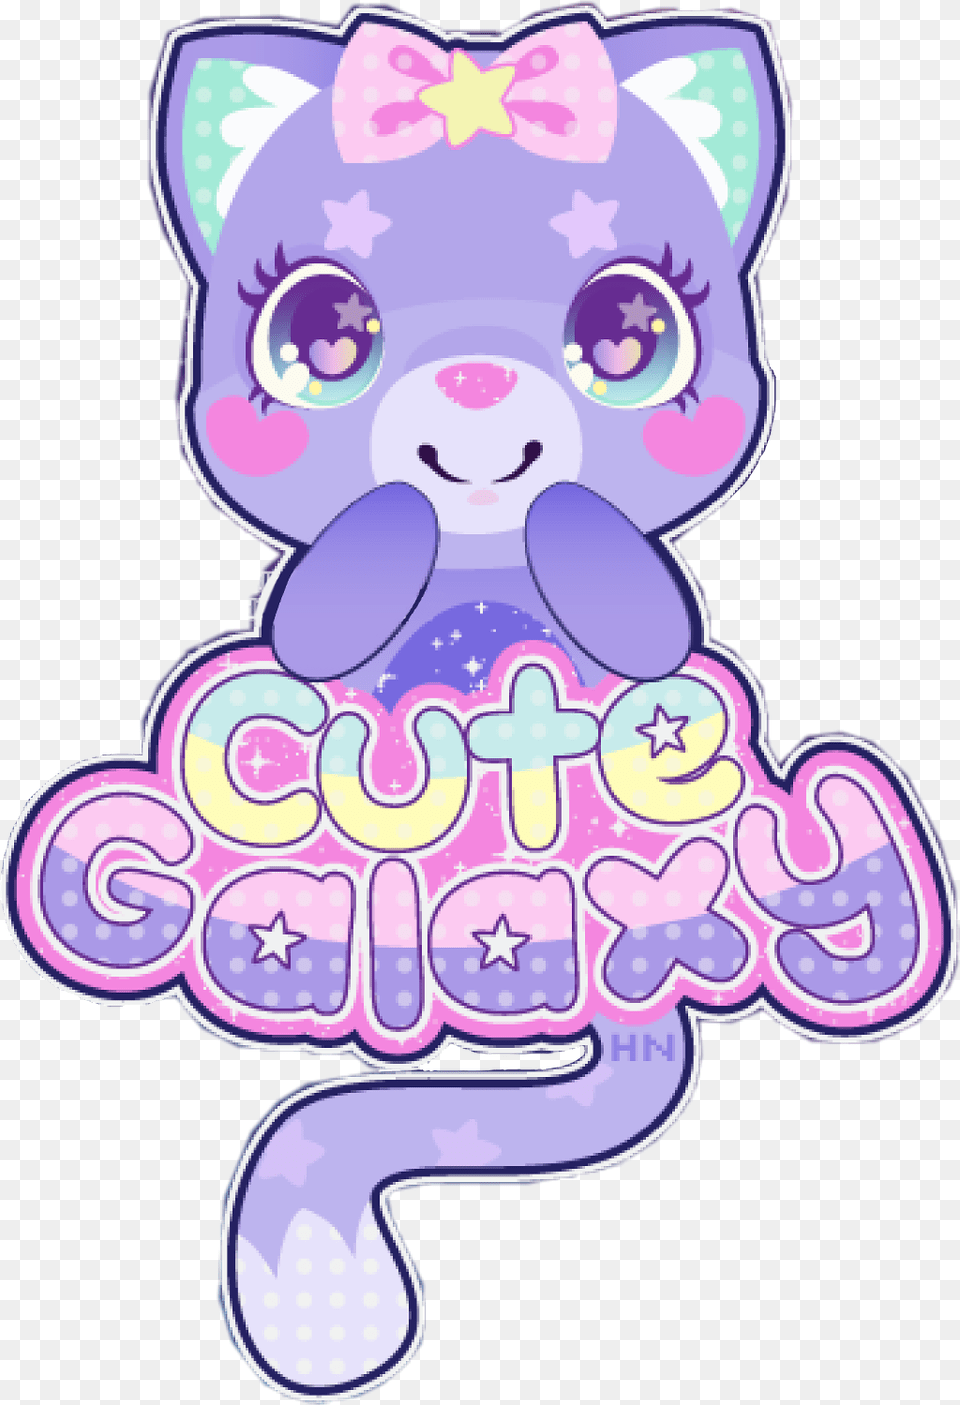 Galaxy Cute Kawaii Cat Cartoon Anime Chibi Star Galaxy Cute Kawaii Cat, Purple Free Transparent Png